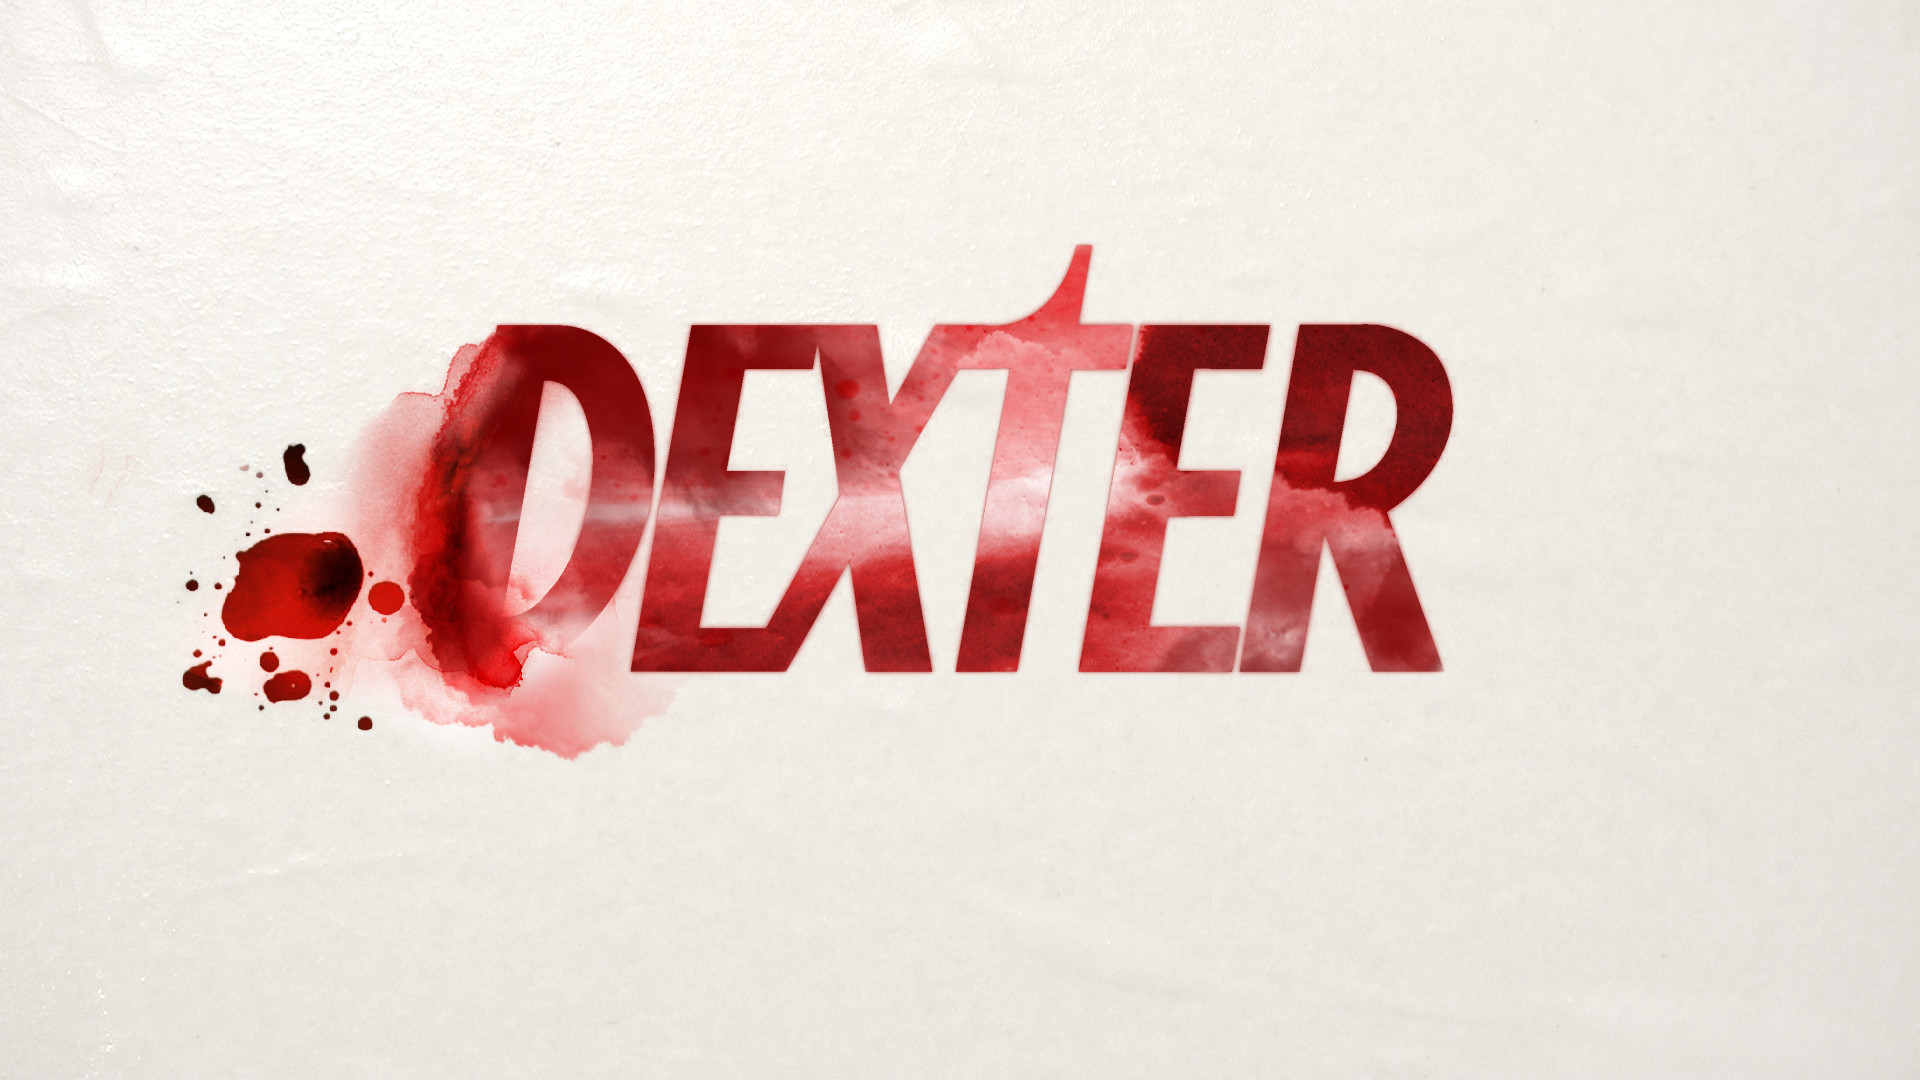 Dexter Wallpaper Pictures Image